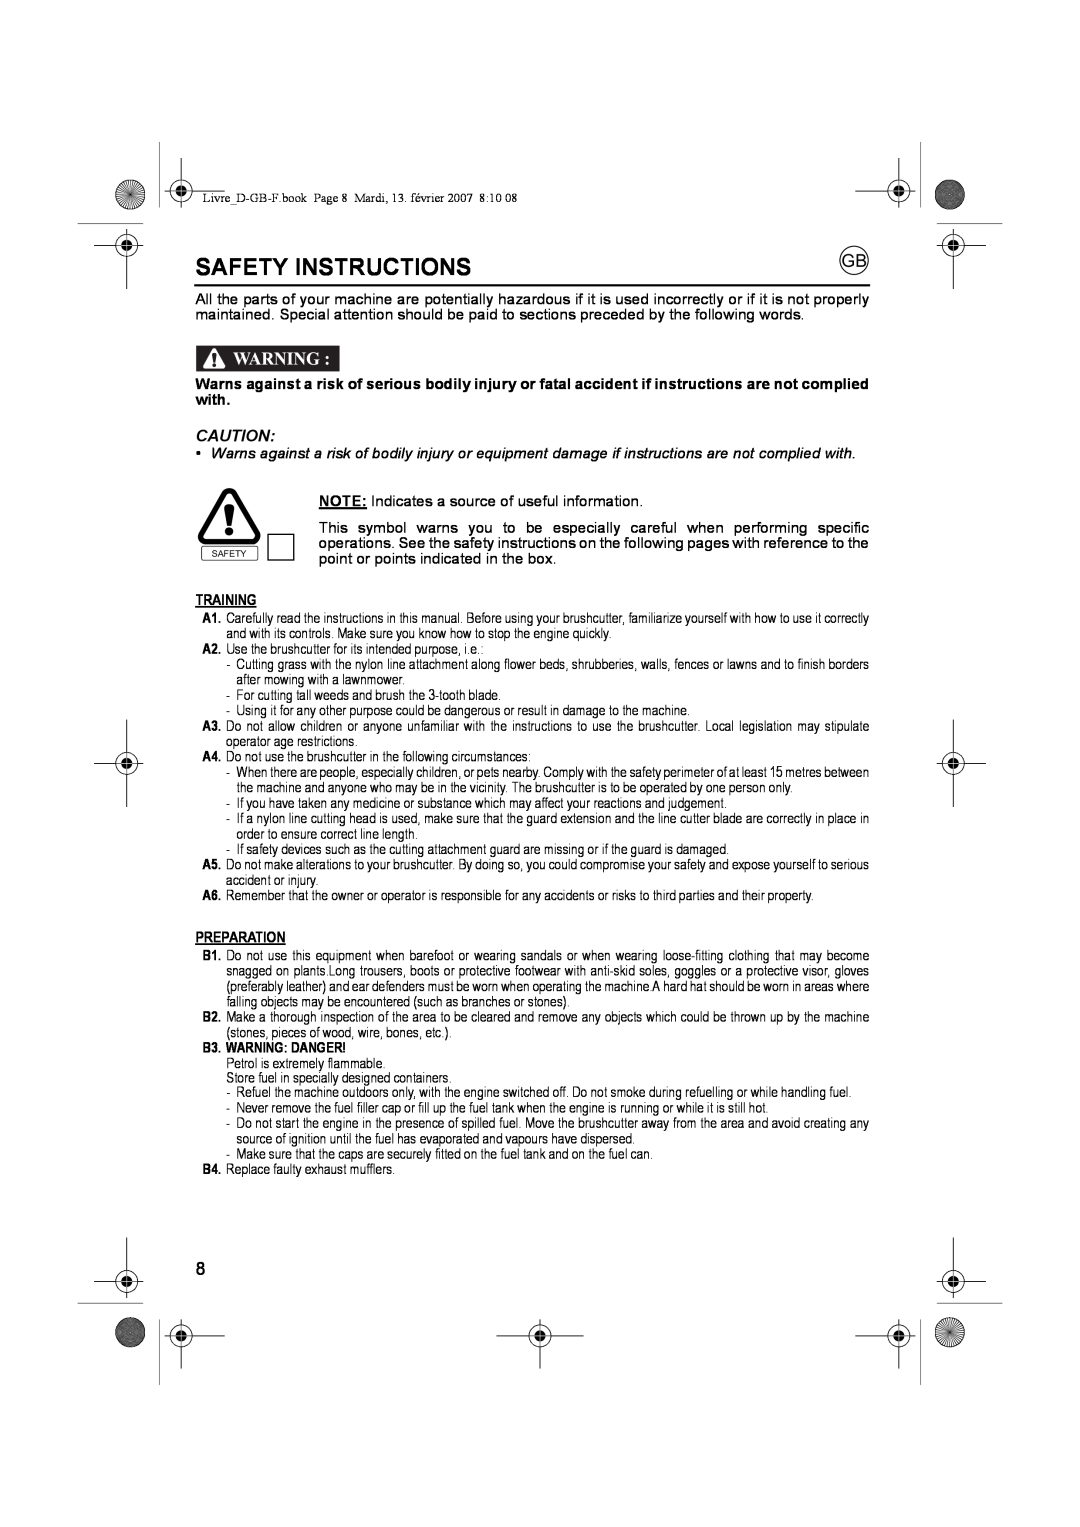 Honda Power Equipment UMK435E owner manual Safety Instructions, Training, Preparation, B3. WARNING DANGER 